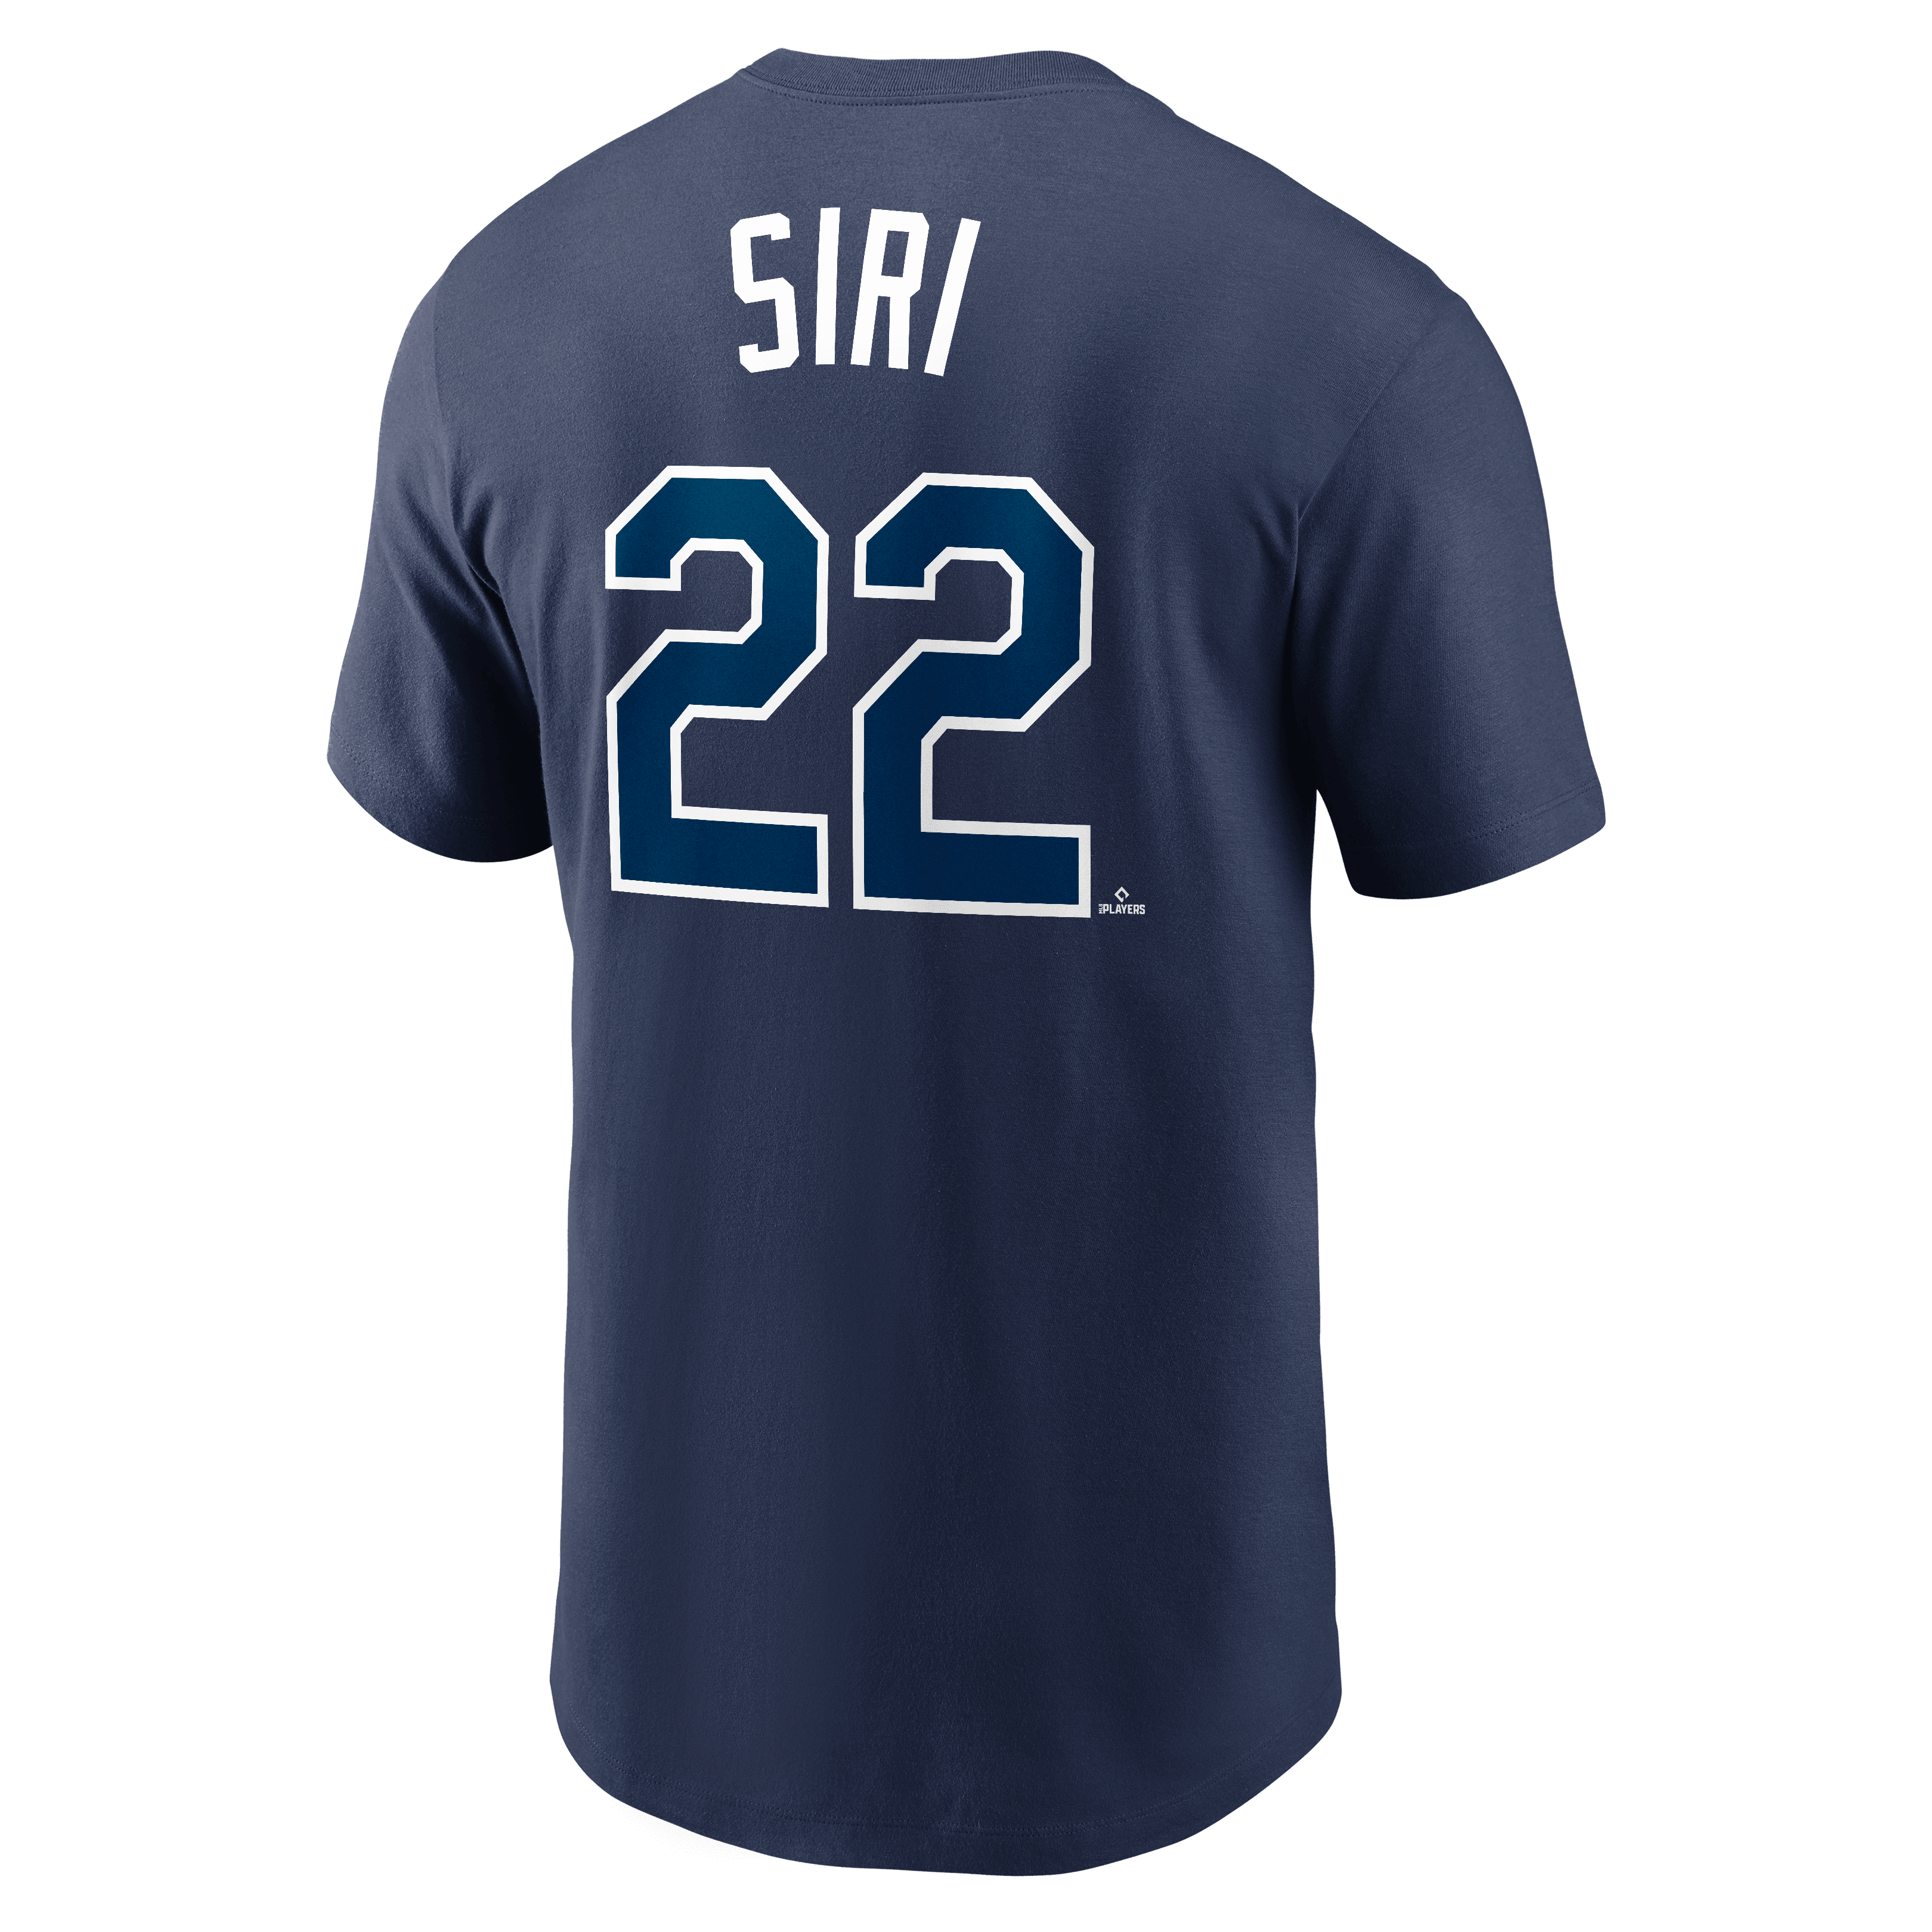 Tampa Bay Rays Jose Siri #22 Player T-Shirt from Nike | The Bay Republic